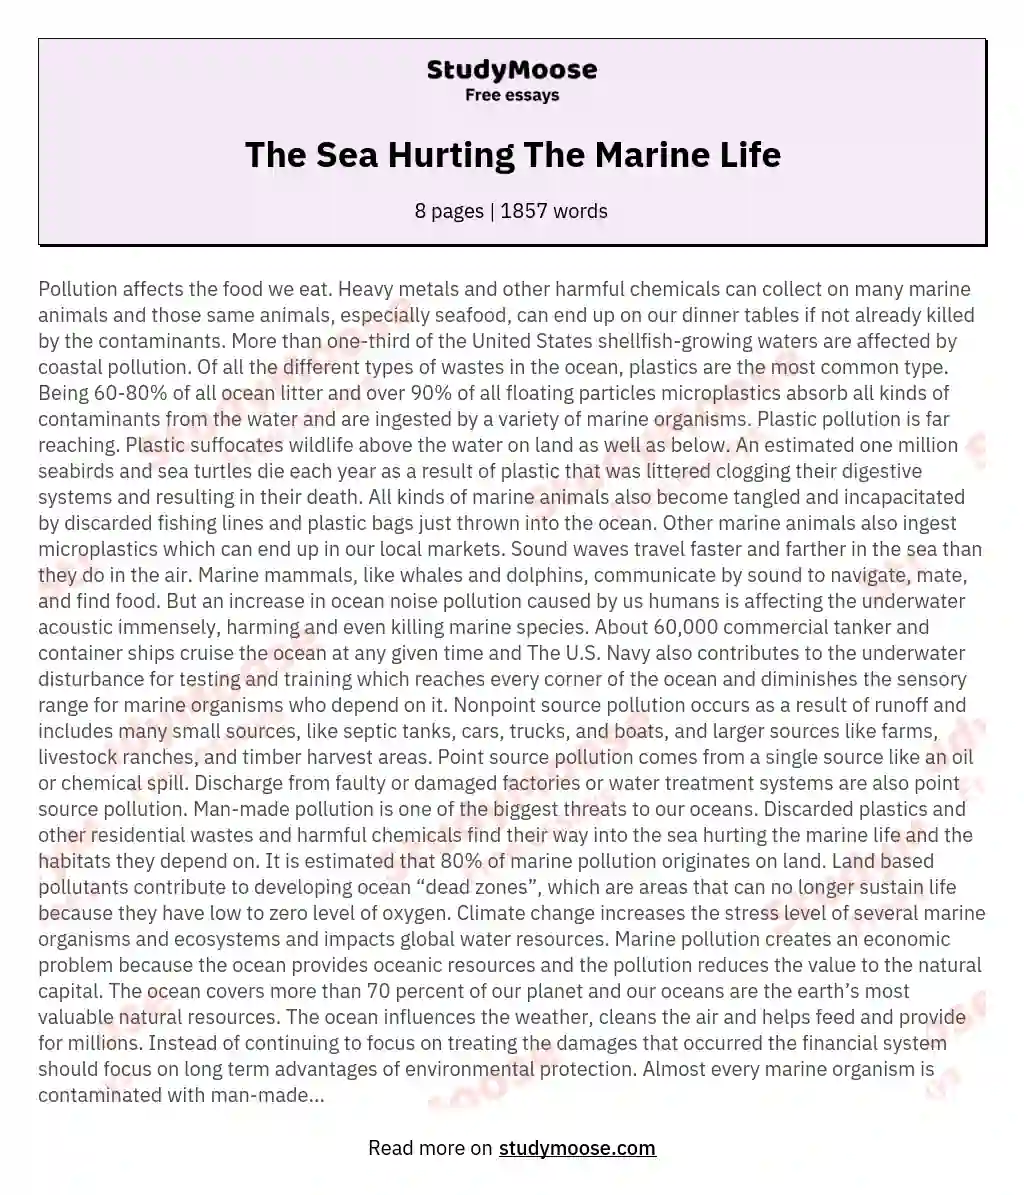 The Sea Hurting The Marine Life essay